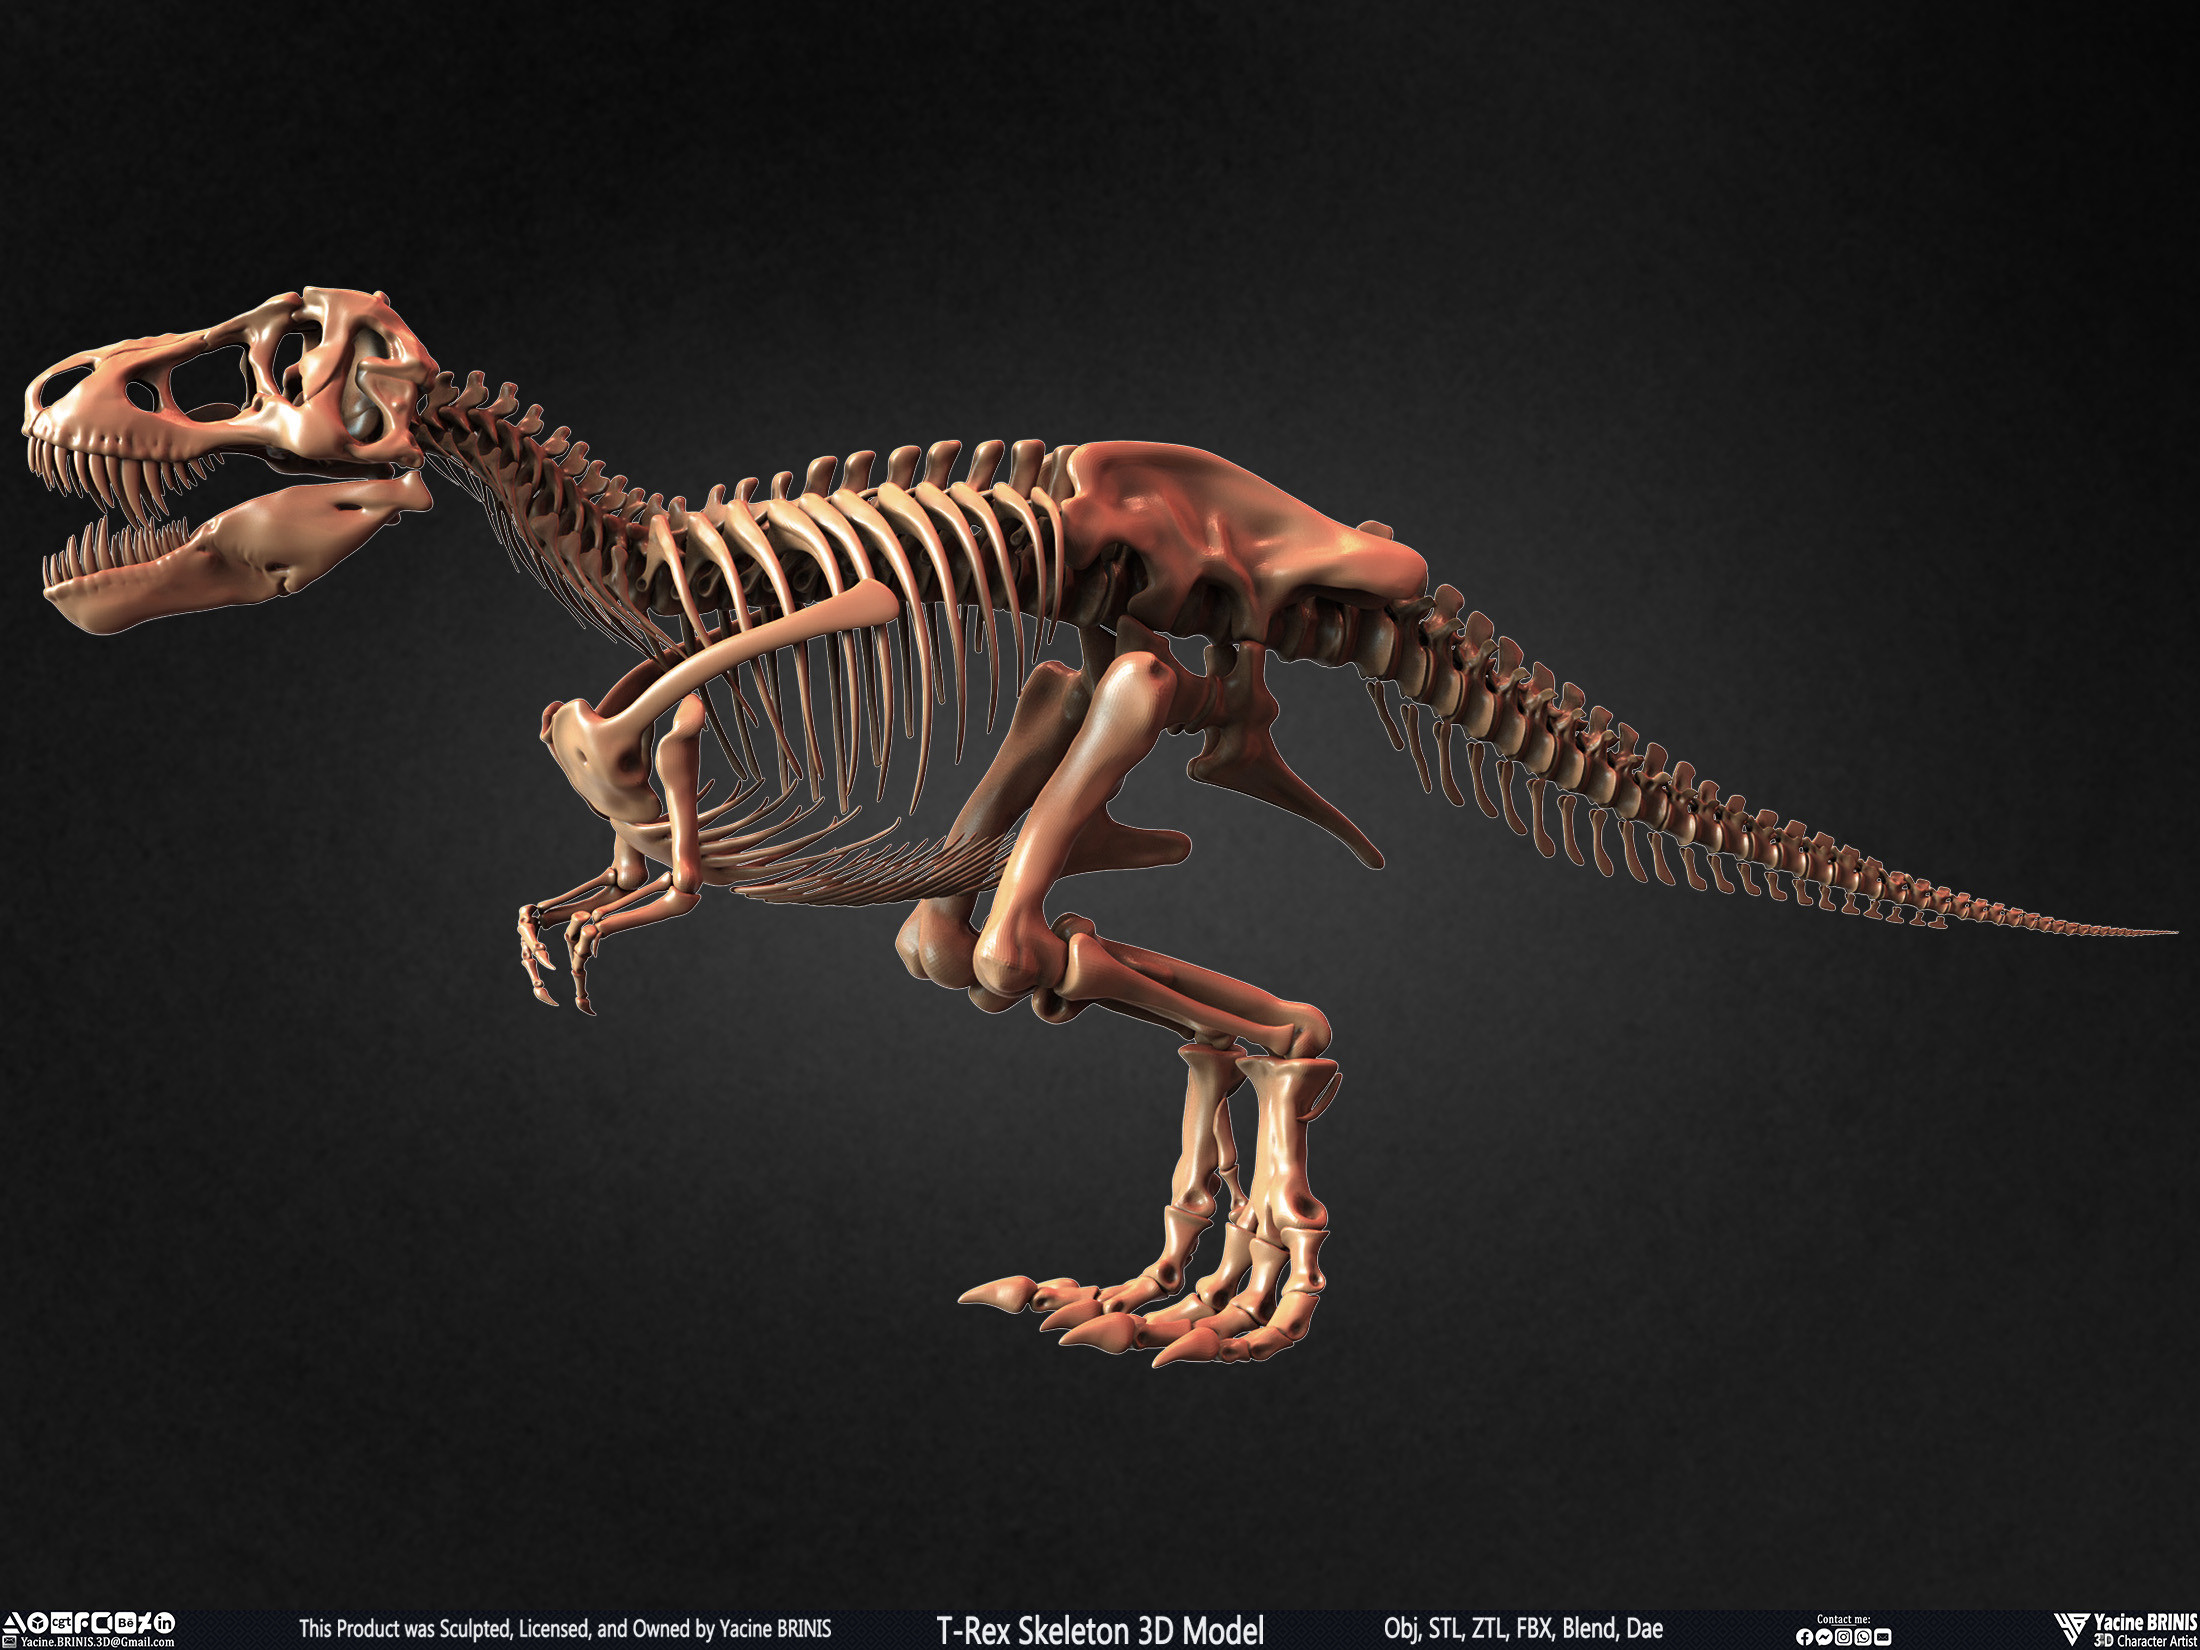 T-Rex Skeleton 3D Model (Tyrannosaurus Rex) Sculpted By Yacine BRINIS Set 010